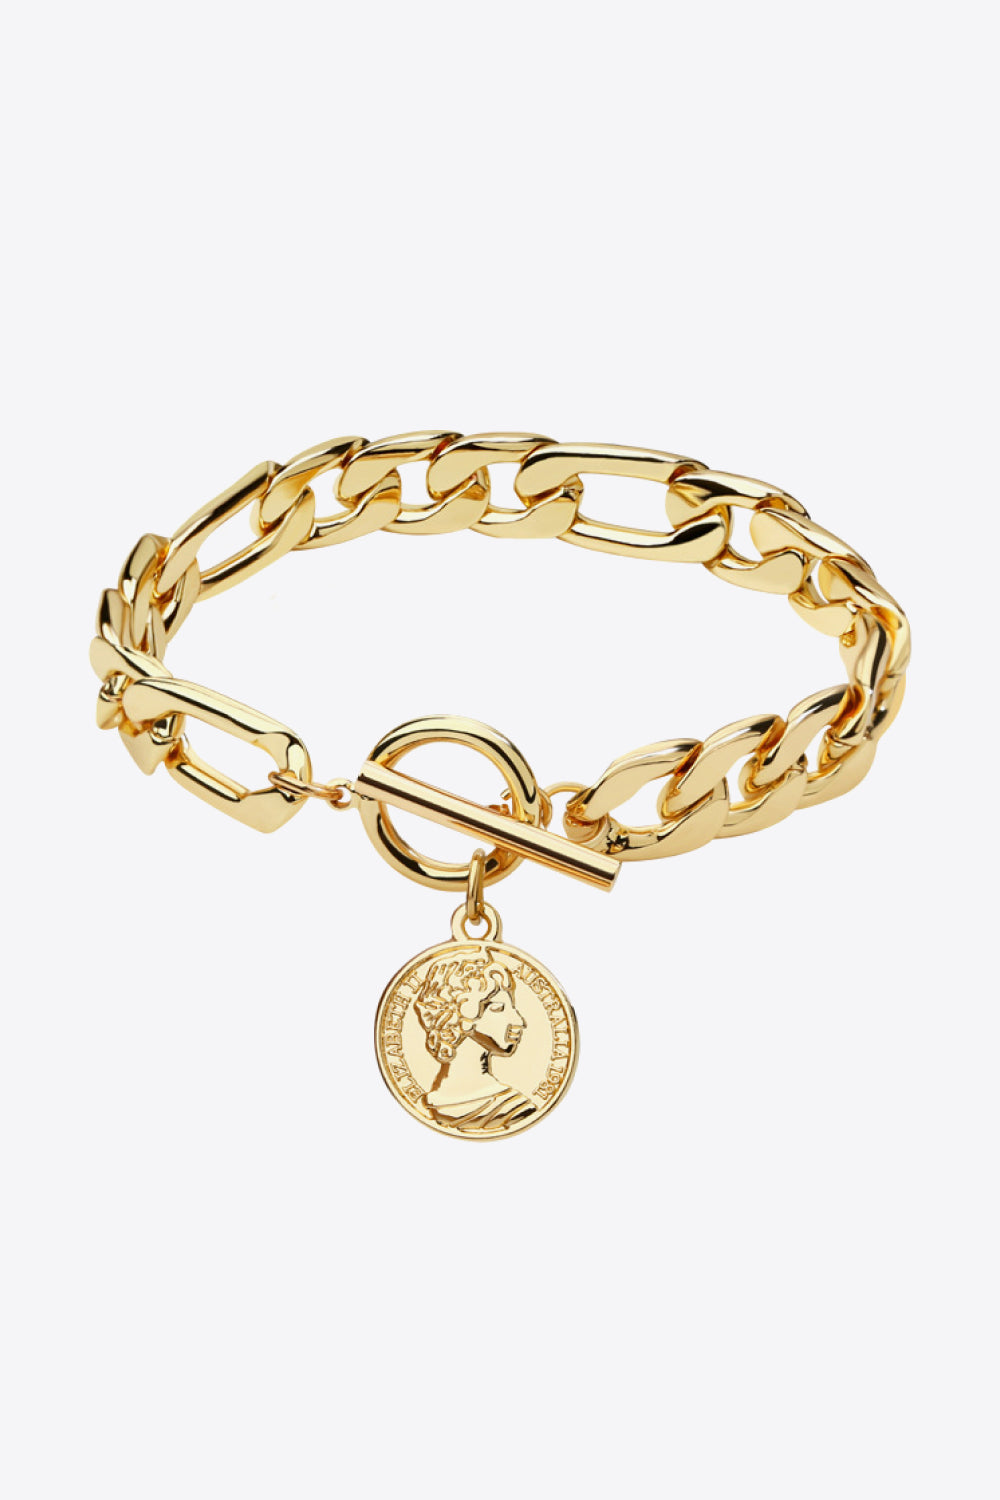 Chunky Chain Toggle Clasp Bracelet - Gold / One Size - Women’s Jewelry - Bracelets - 1 - 2024